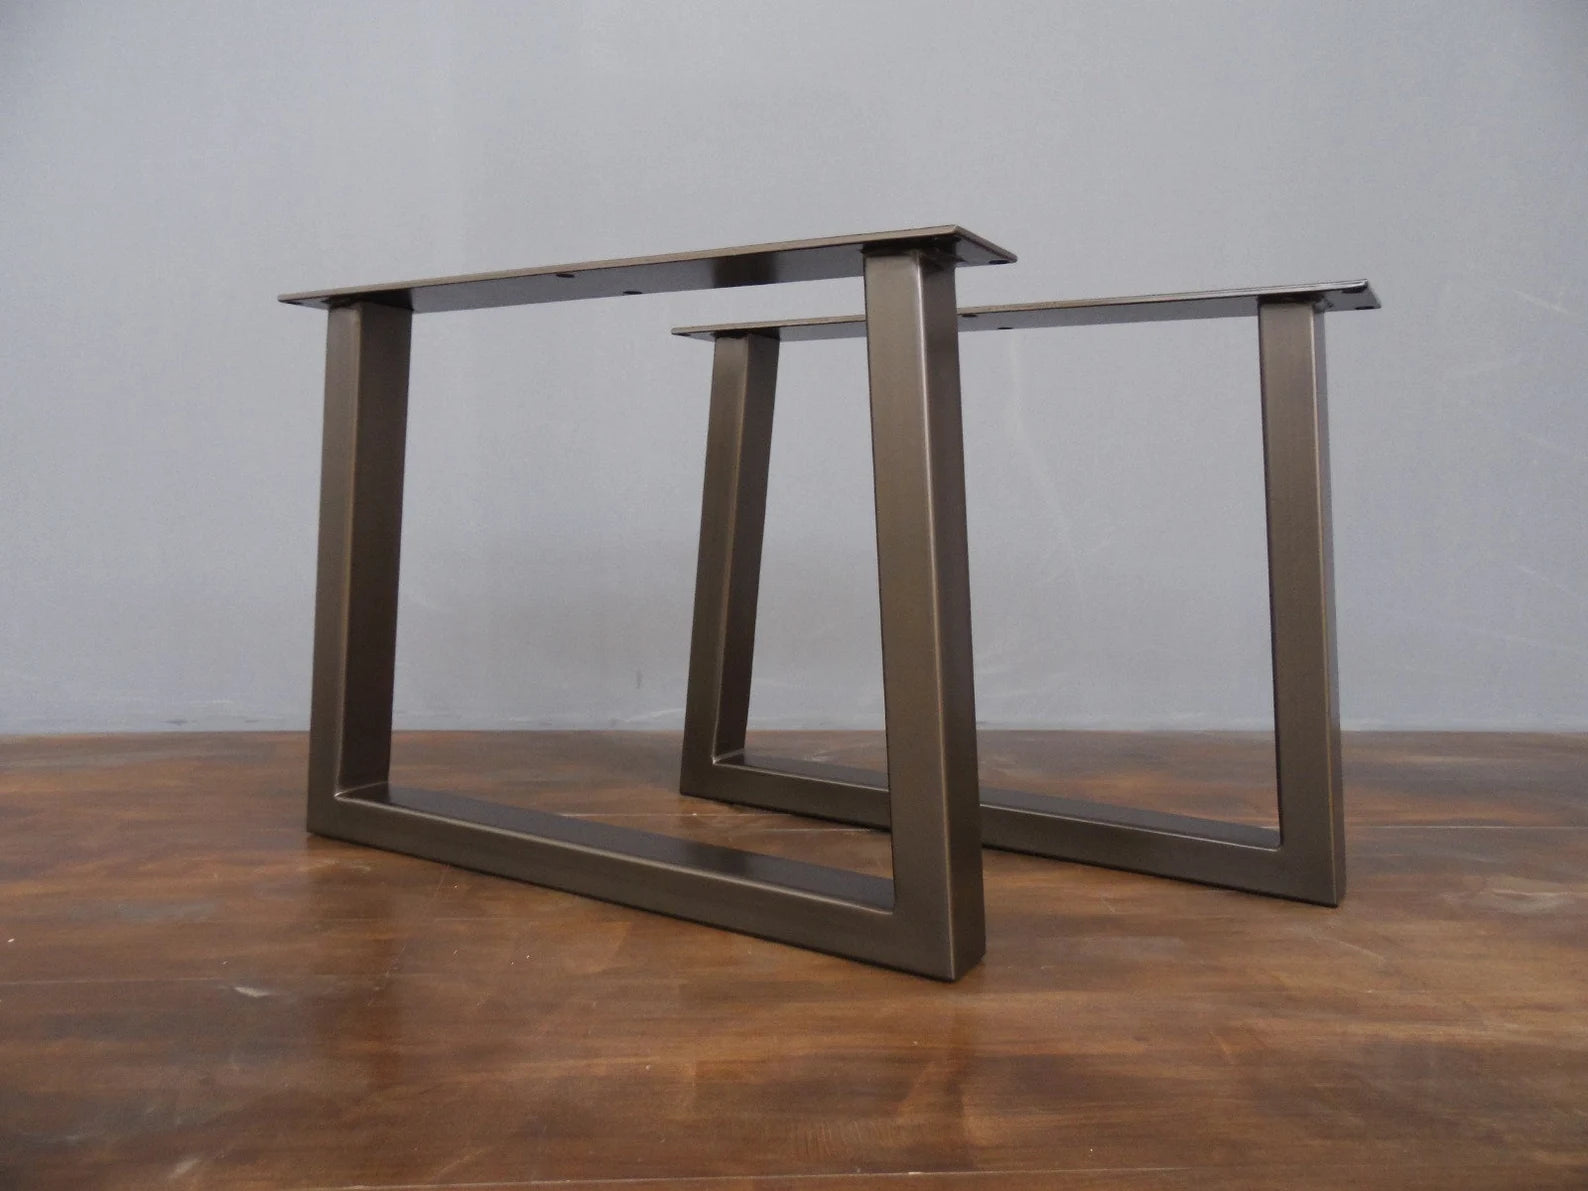 Metal Coffee Table Legs ,16” Trapezoid-IN Table Legs,base Width 20"  Set (2)